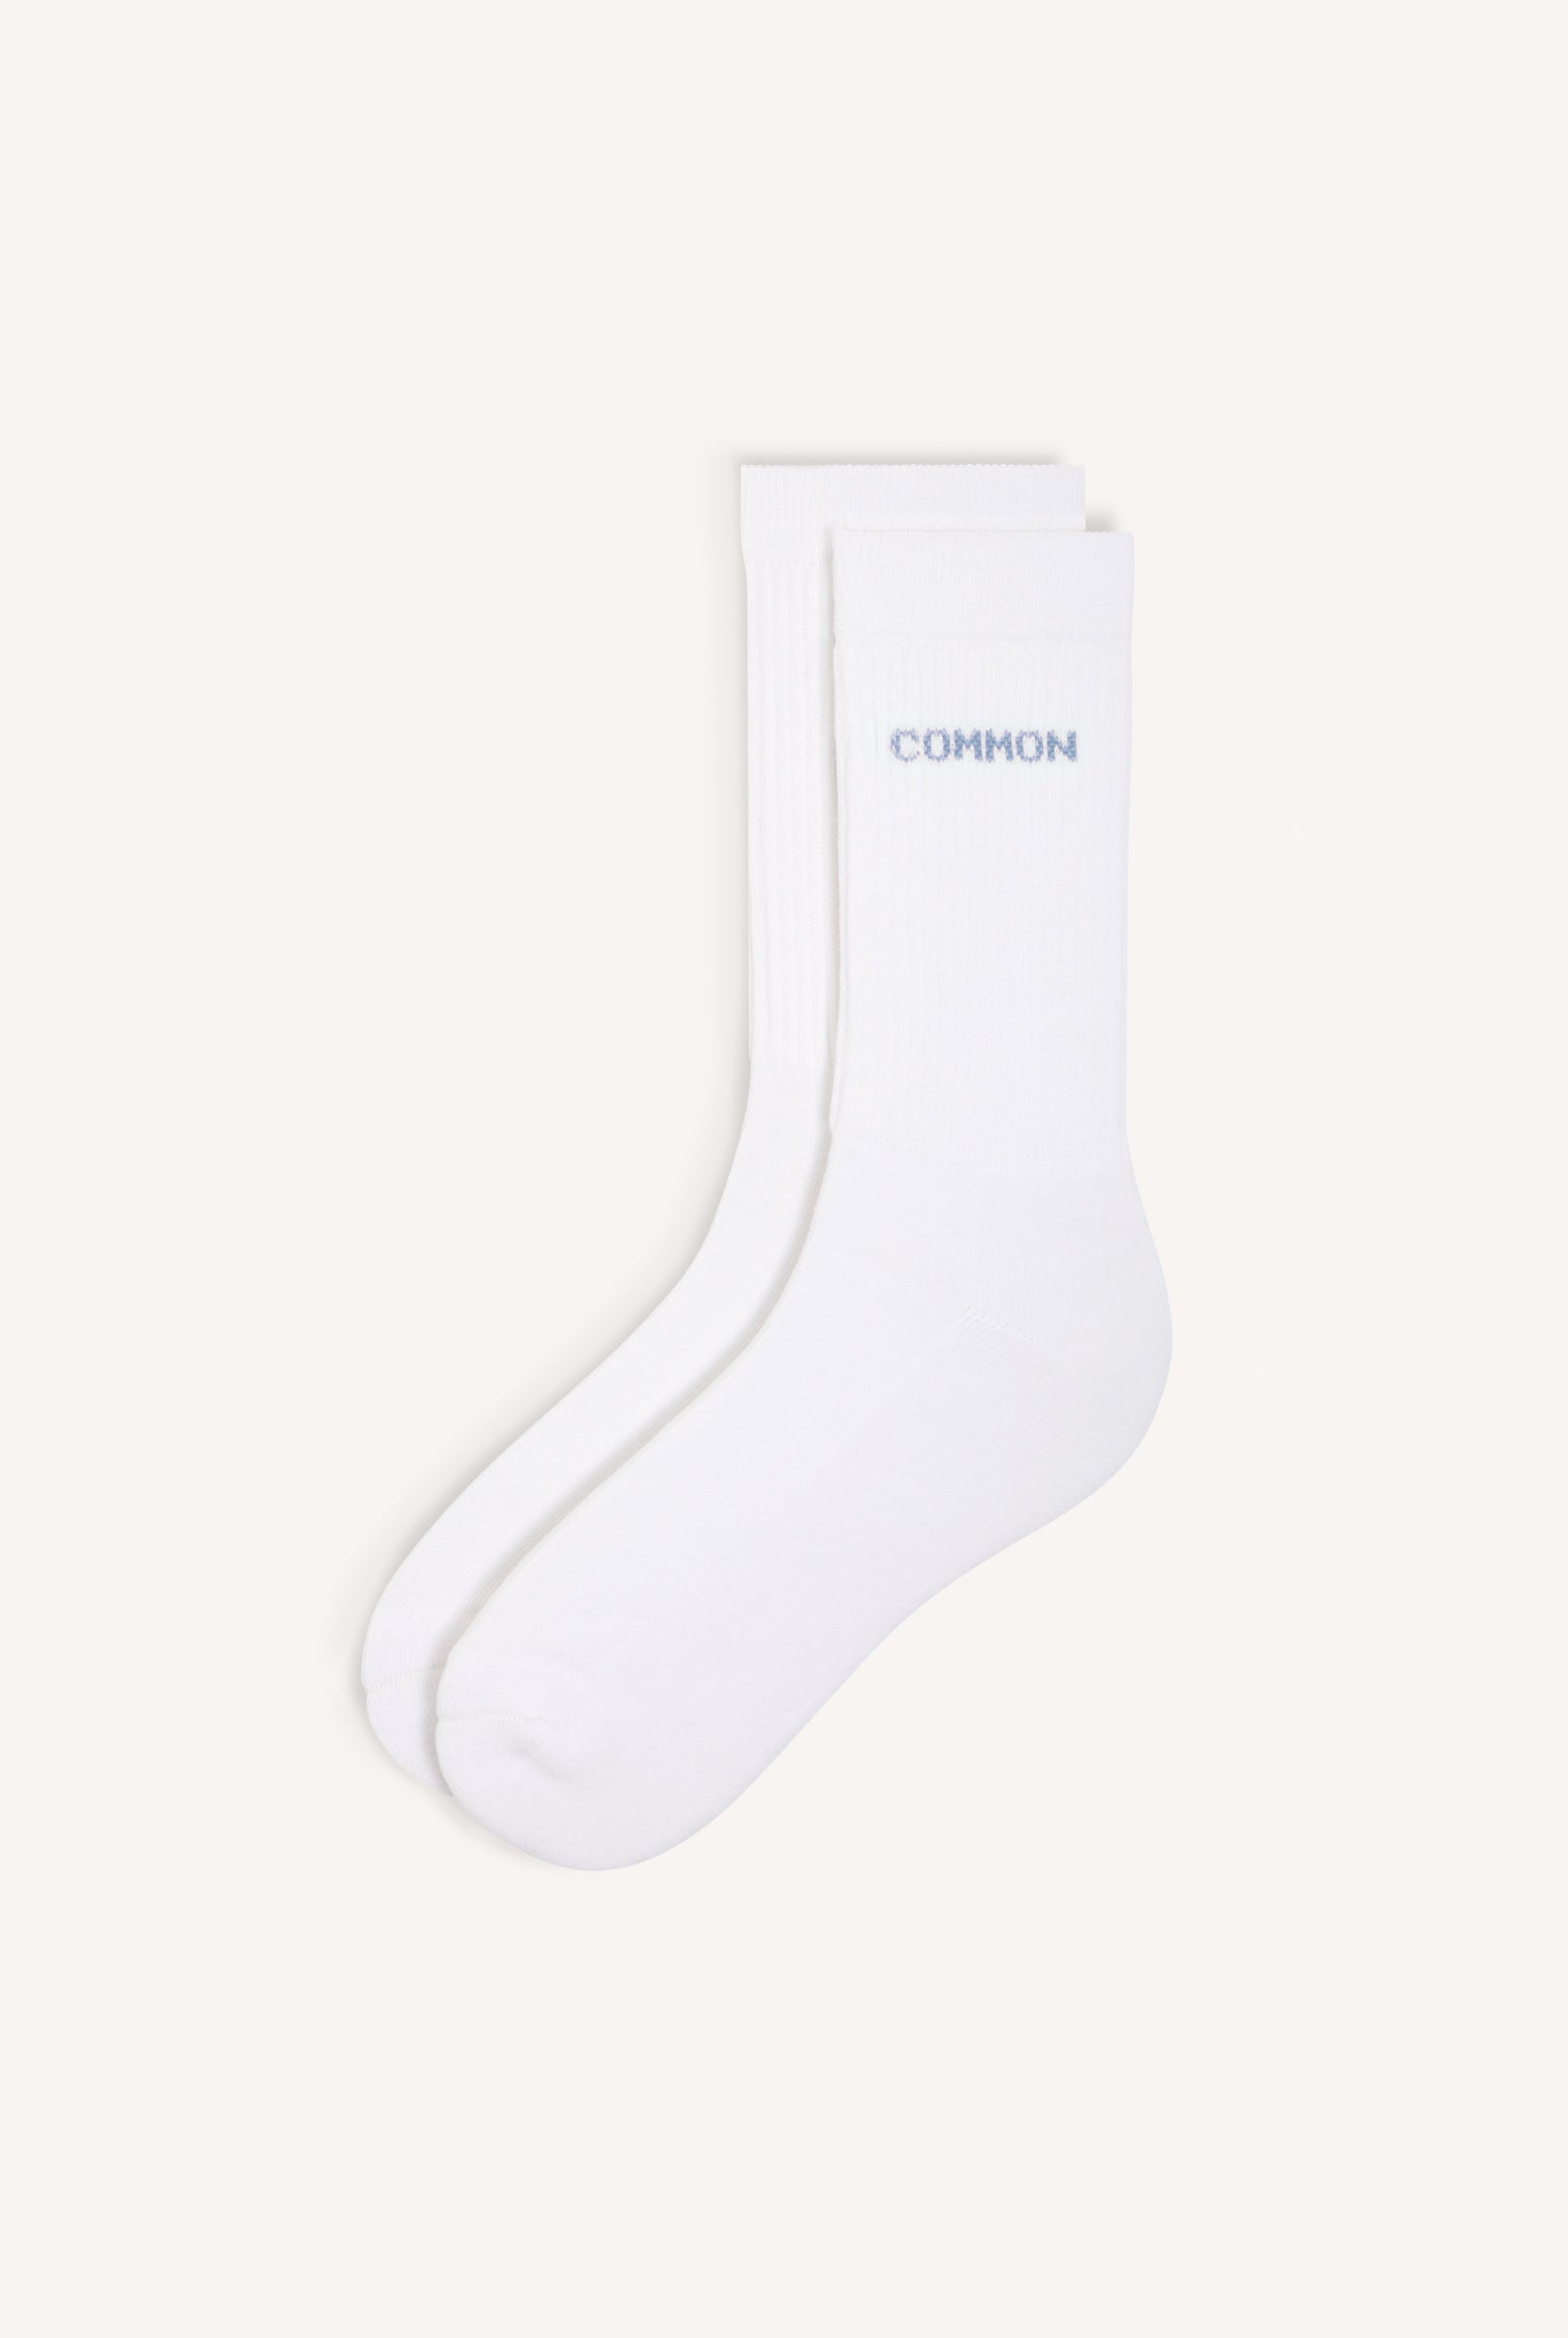 Common Socks